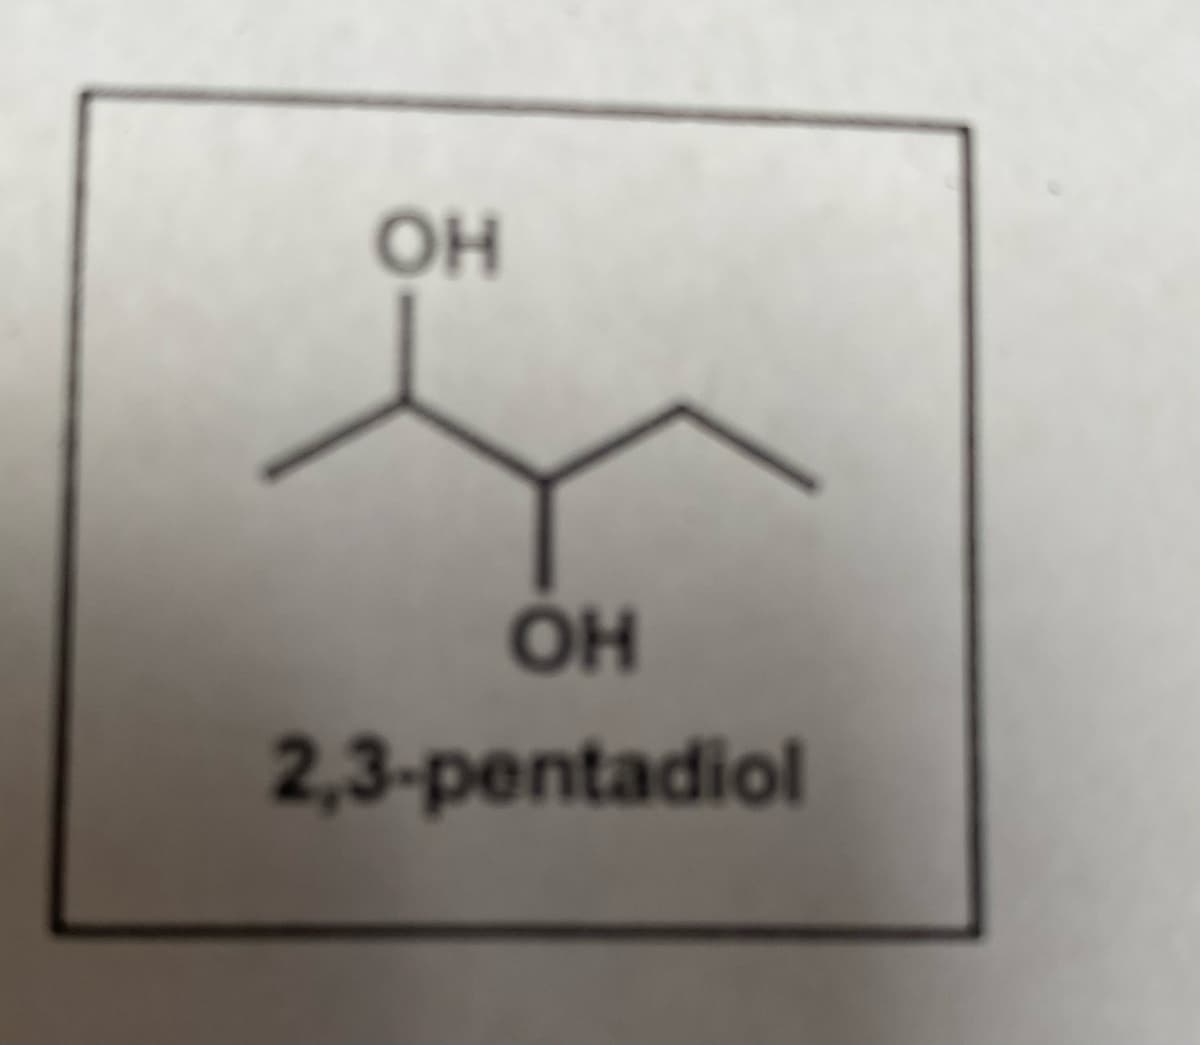 OH
ОН
2,3-pentadiol